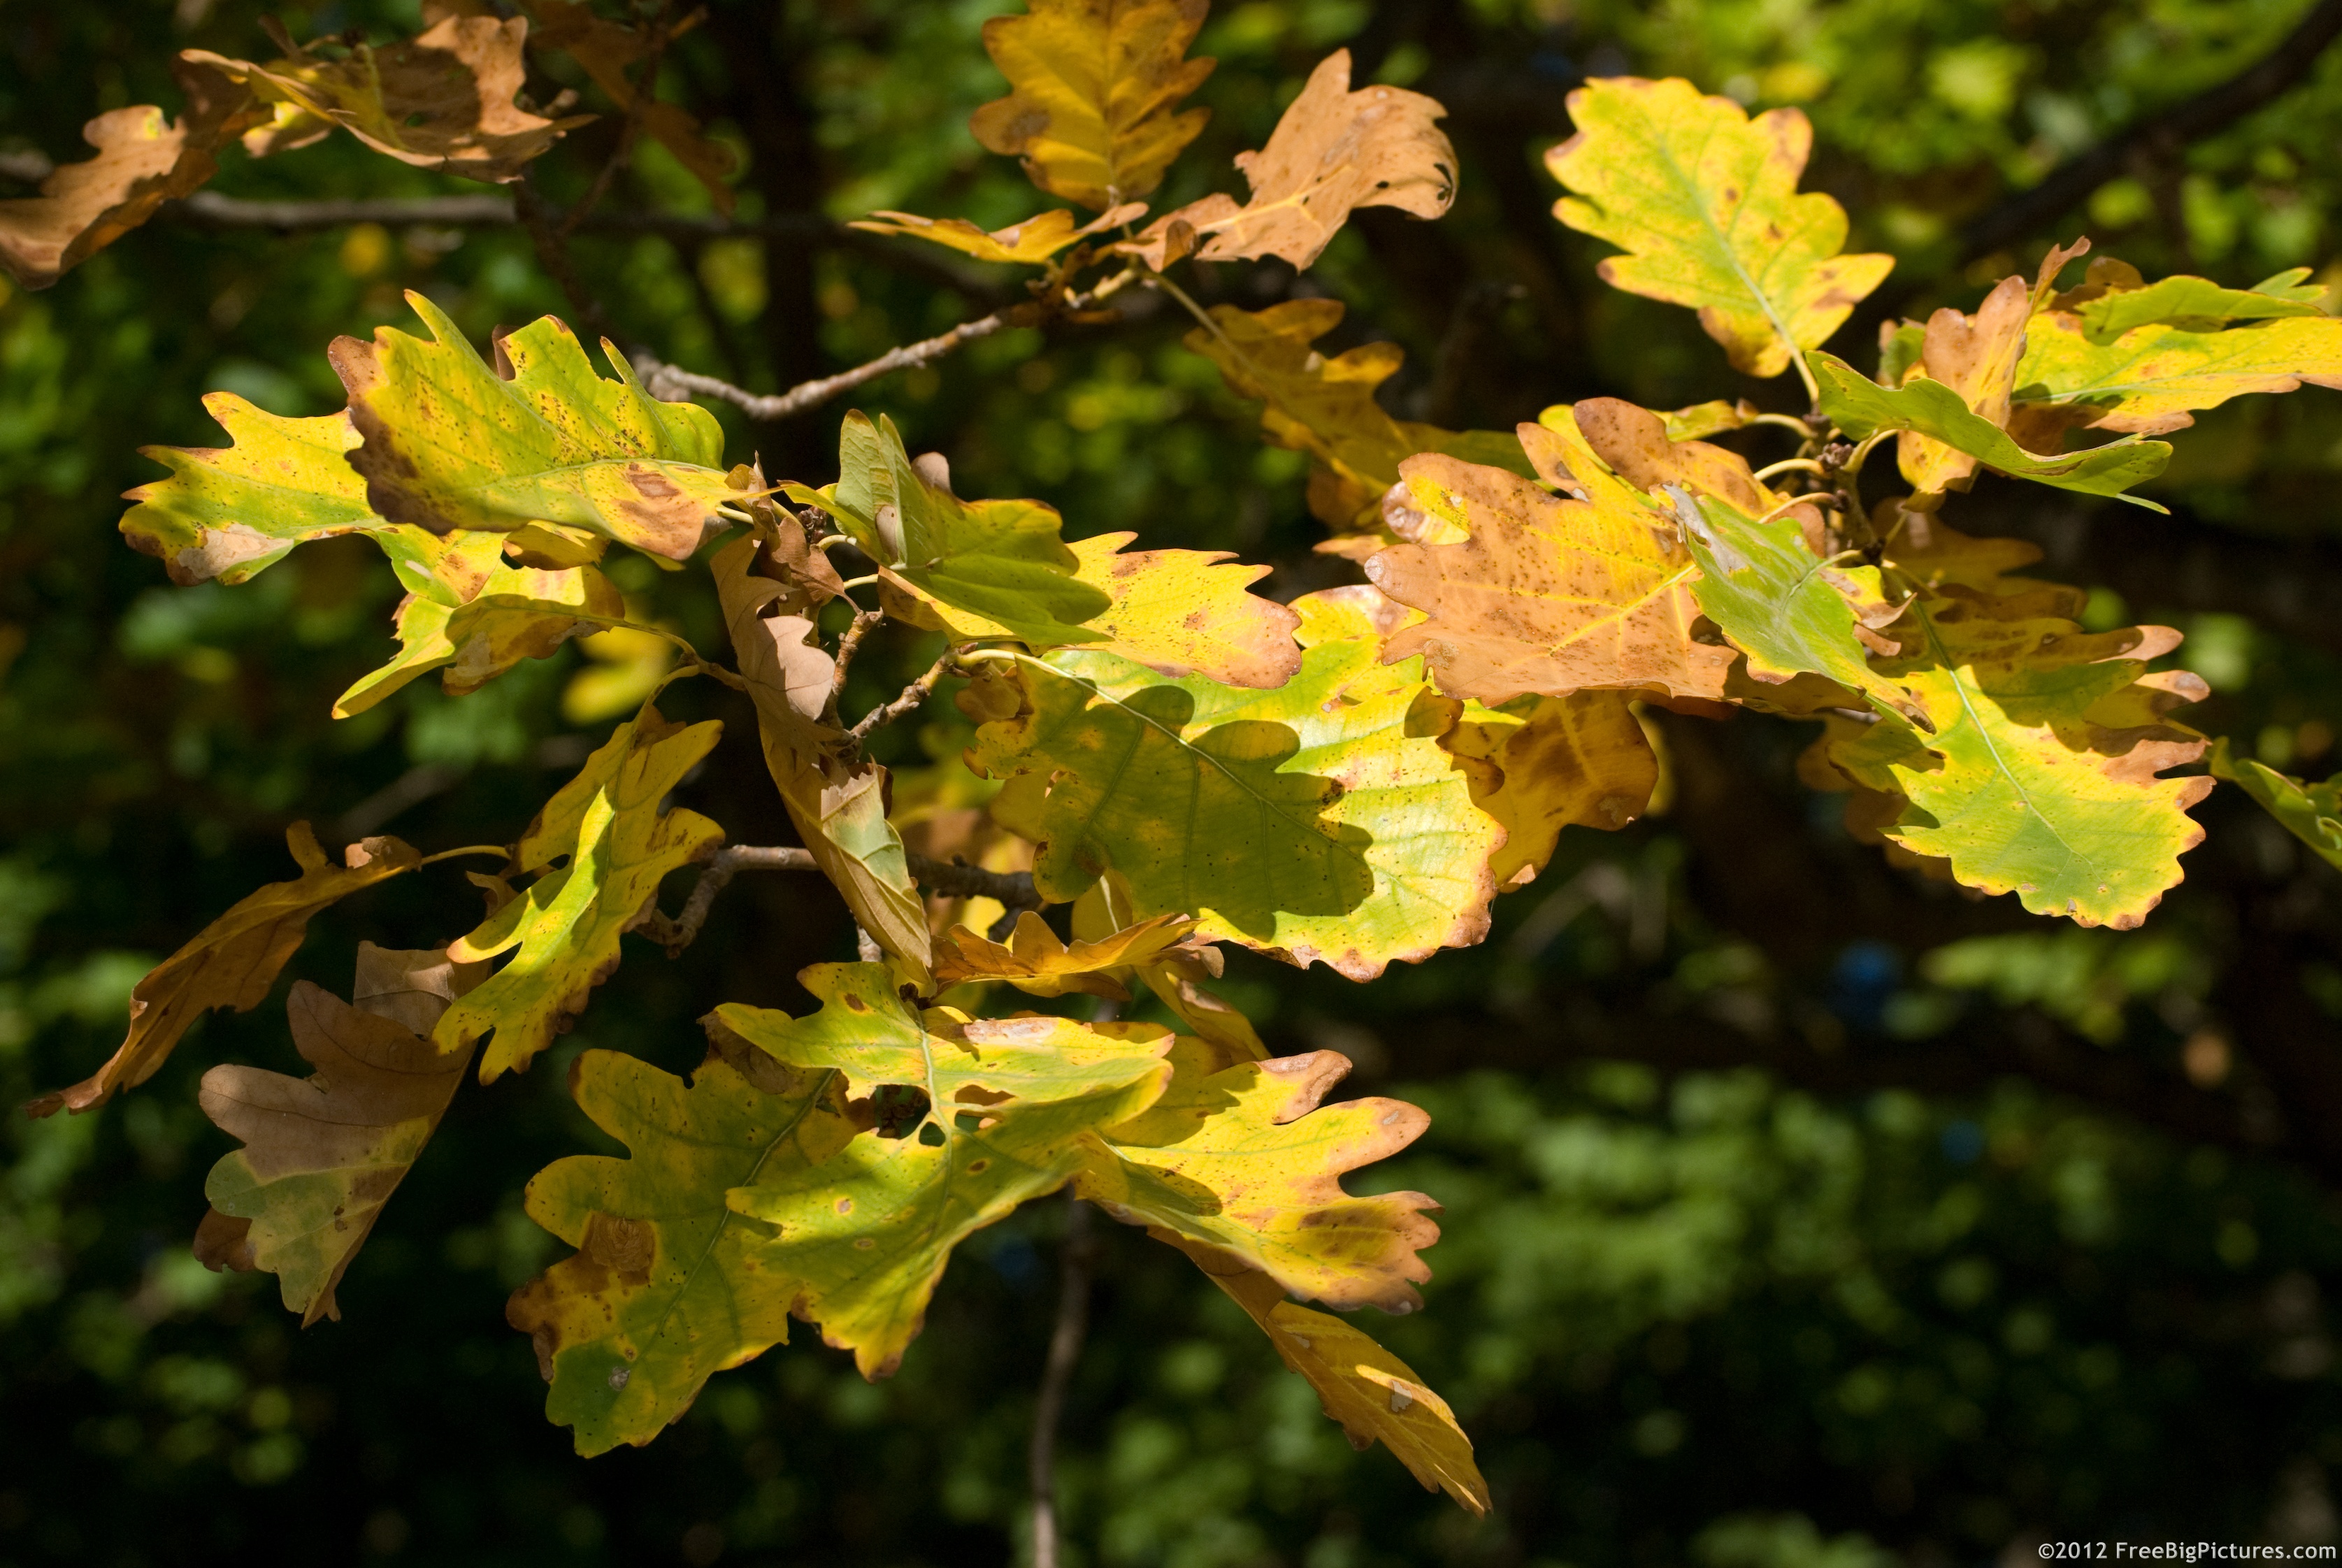 Yellow oak leaves in October